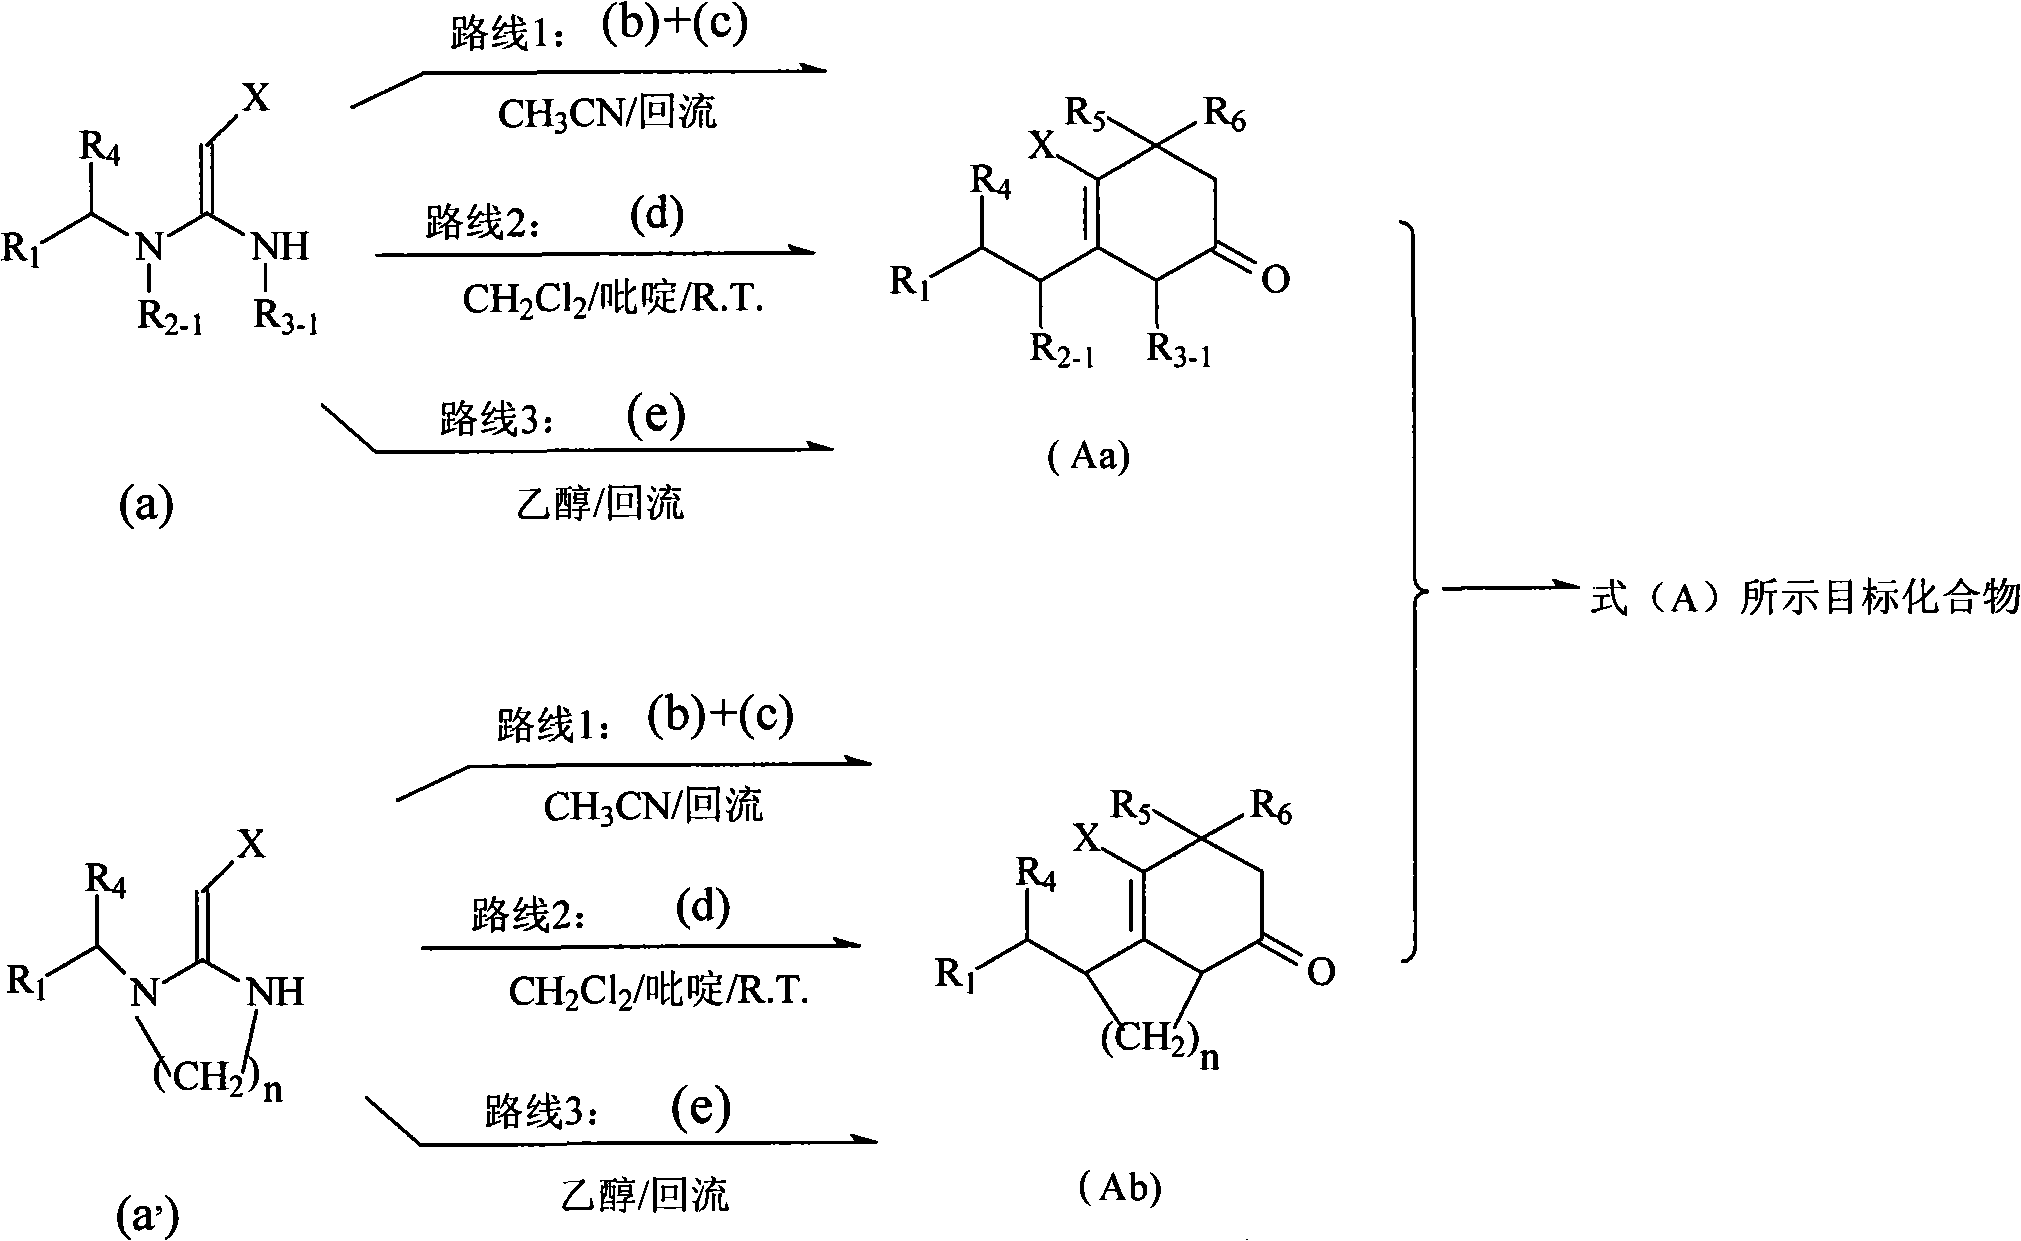 3,4-dihydropyridine-2-ketone heterocyclic compound and application thereof